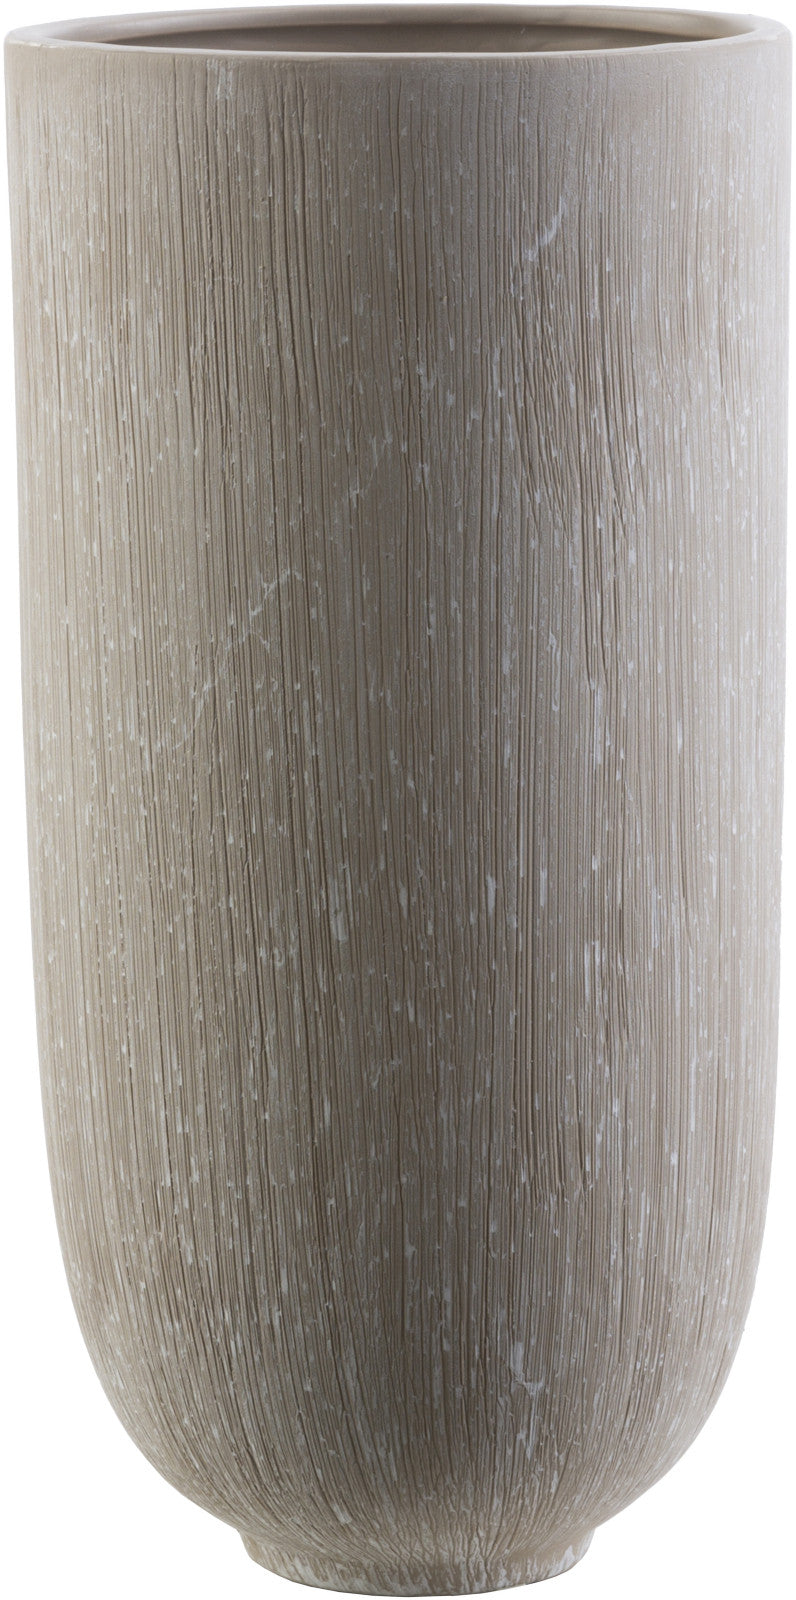 Surya Bautista BAU-707 Vase Table Vase 6.69 X 6.69 X 13.58 inches